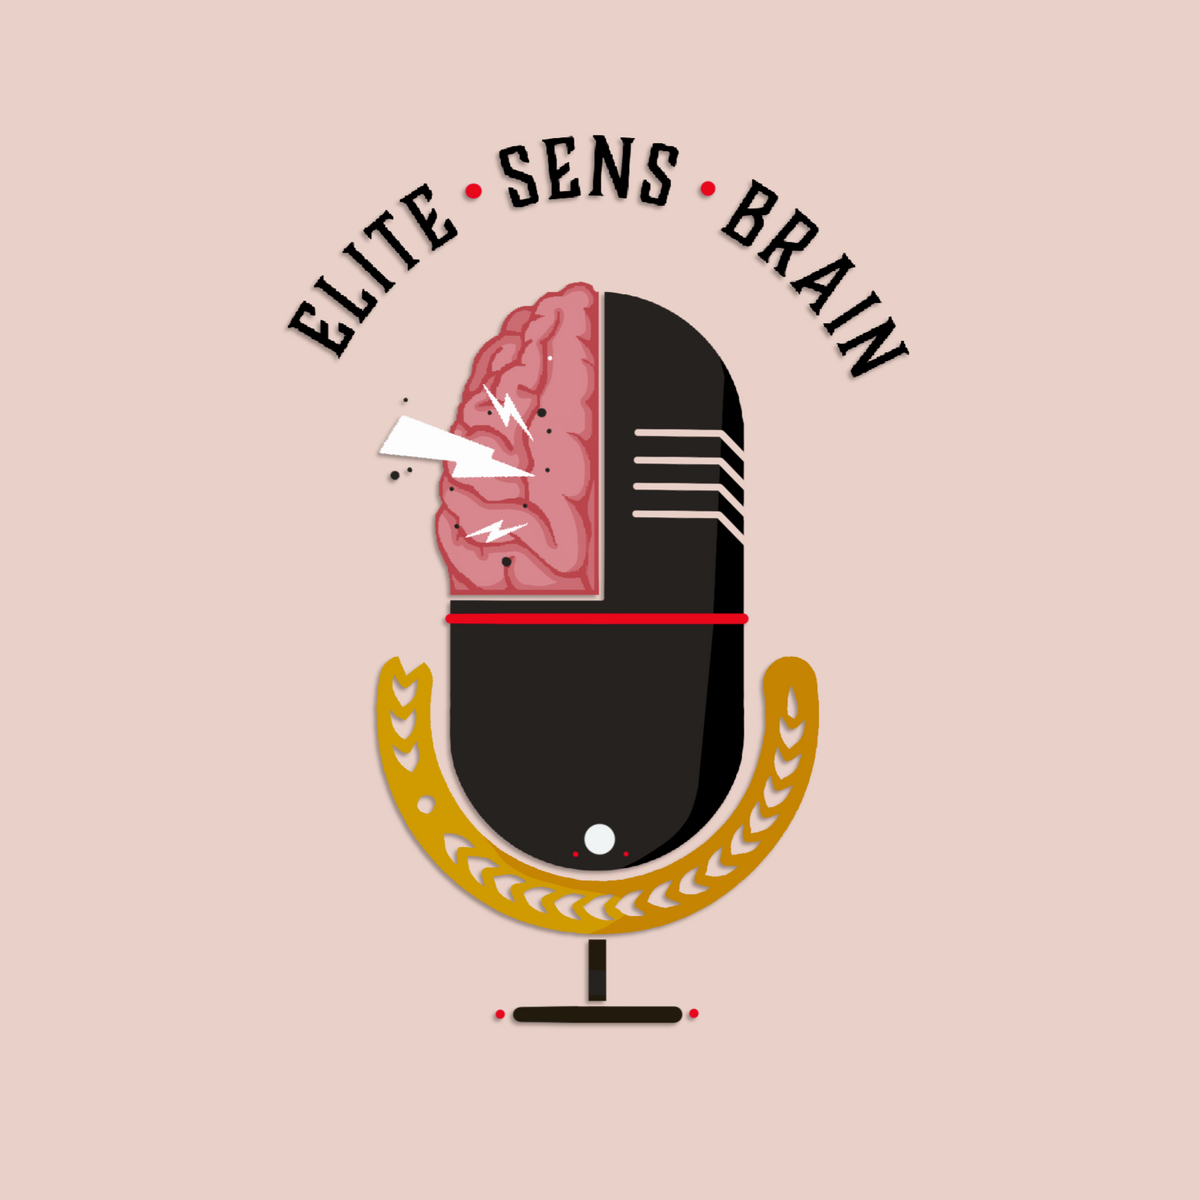 Elite Sens Brain, Episode 4: Who Wants It?